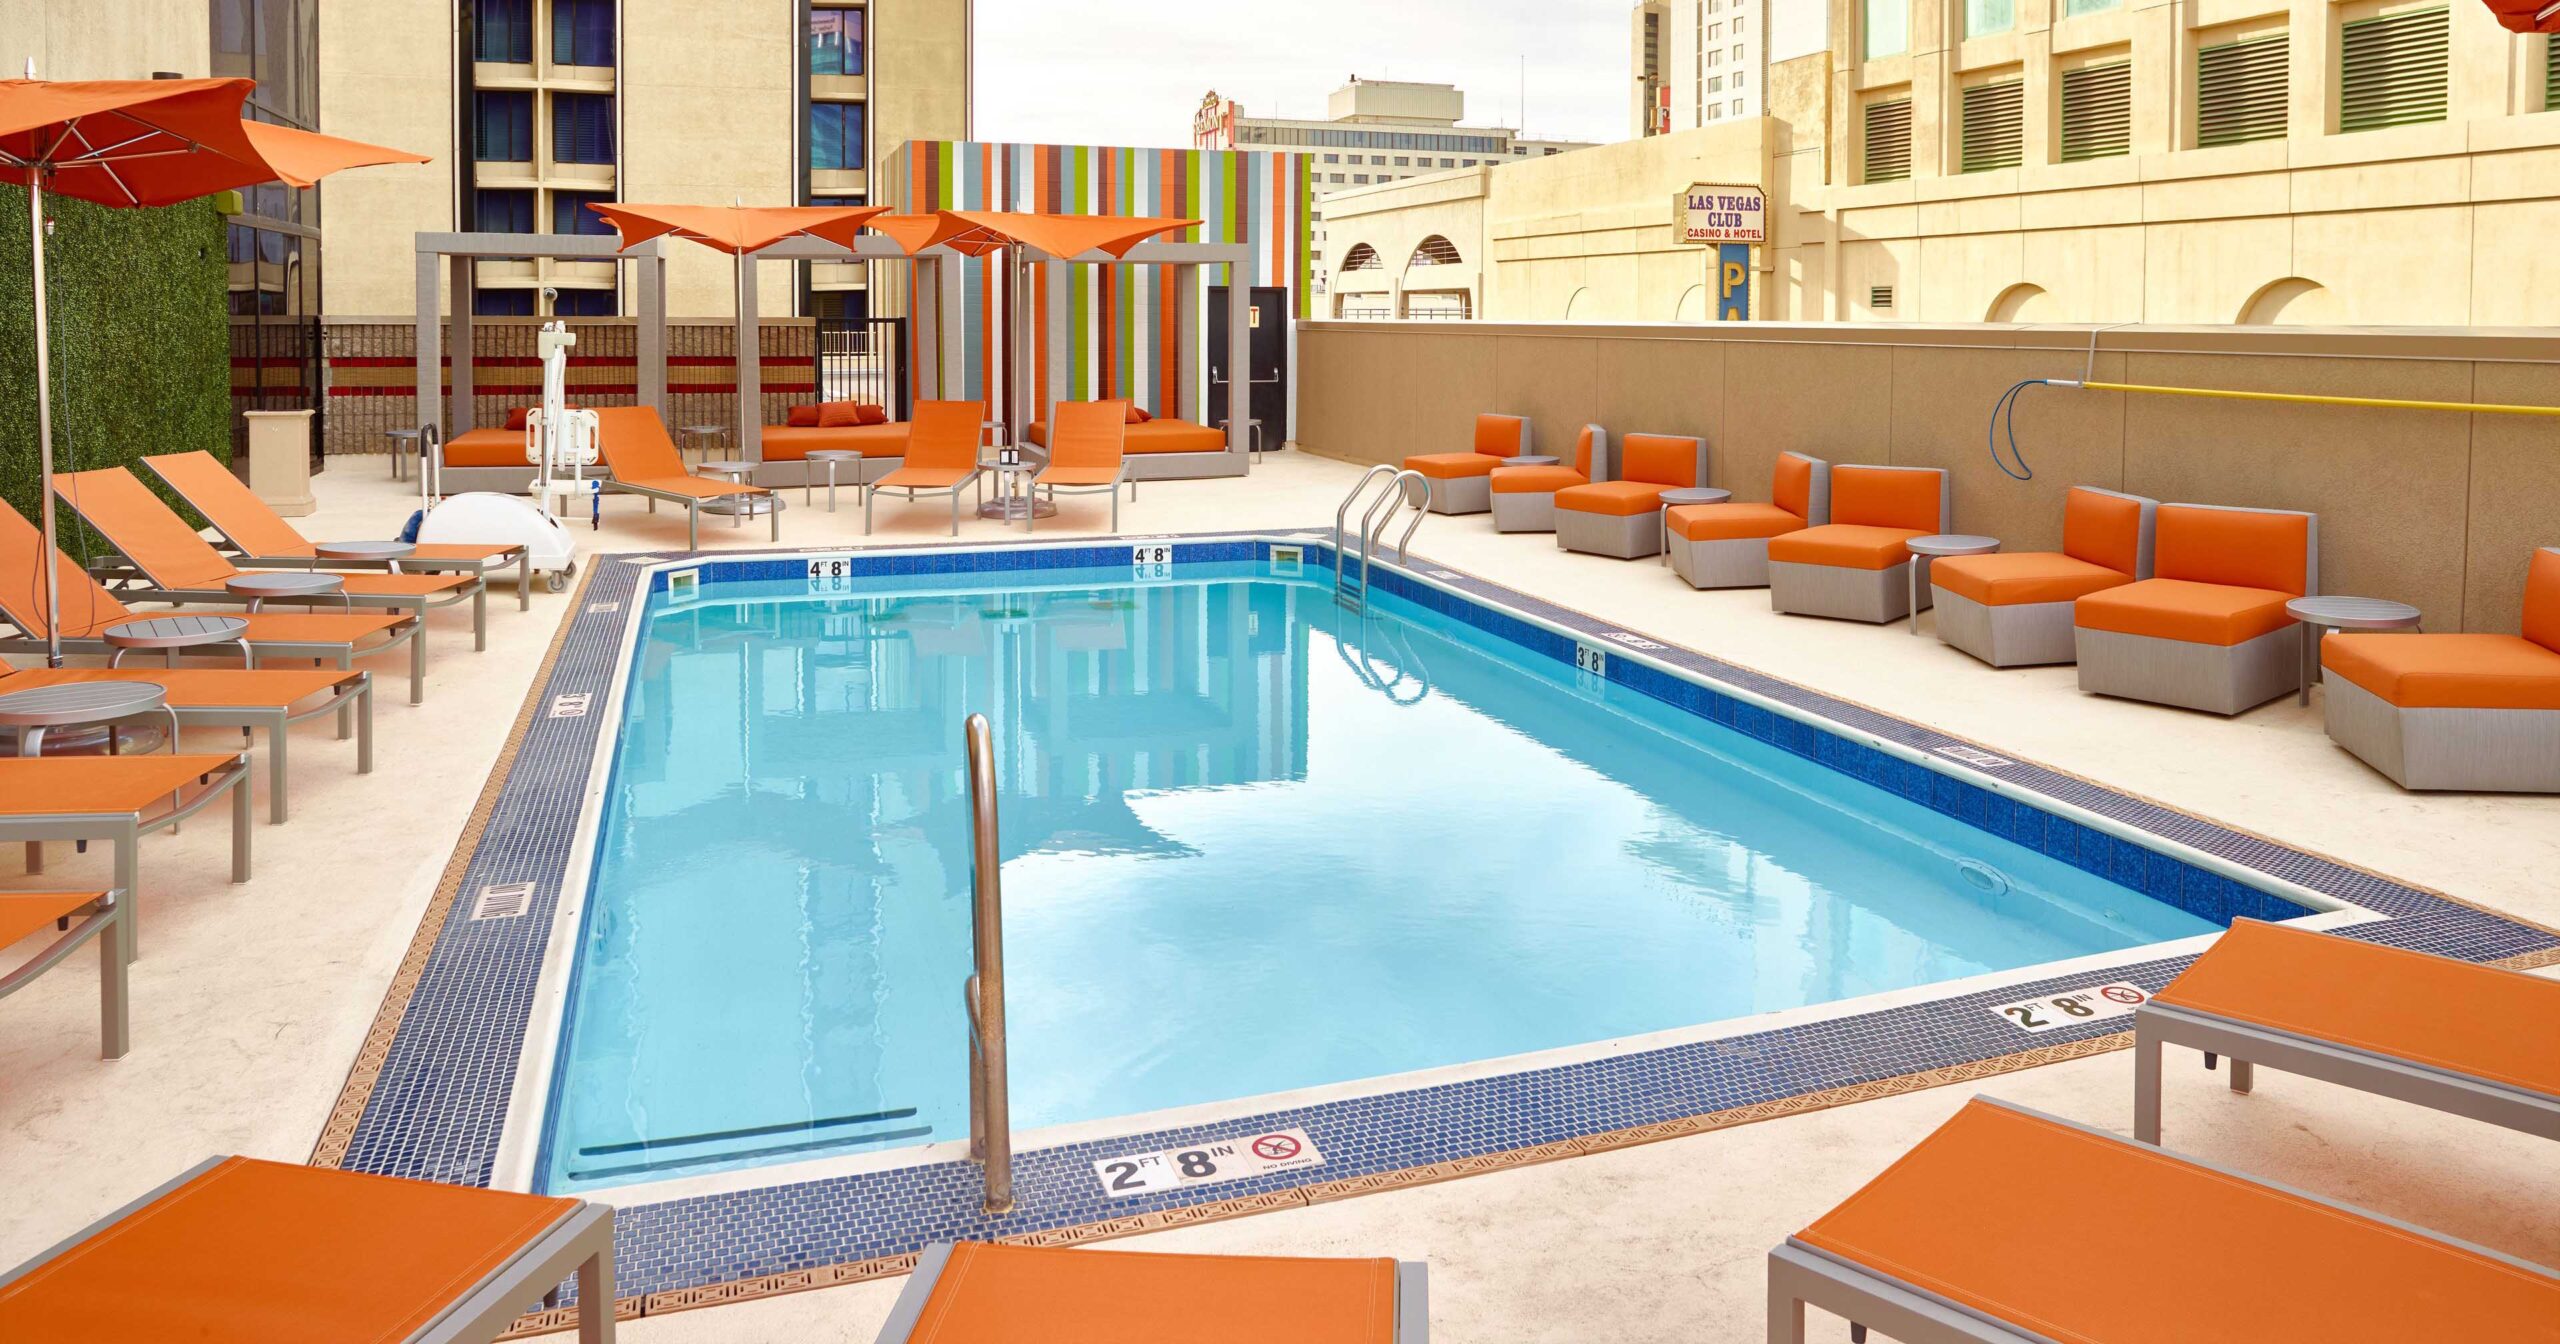 California pool Las Vegas hotels